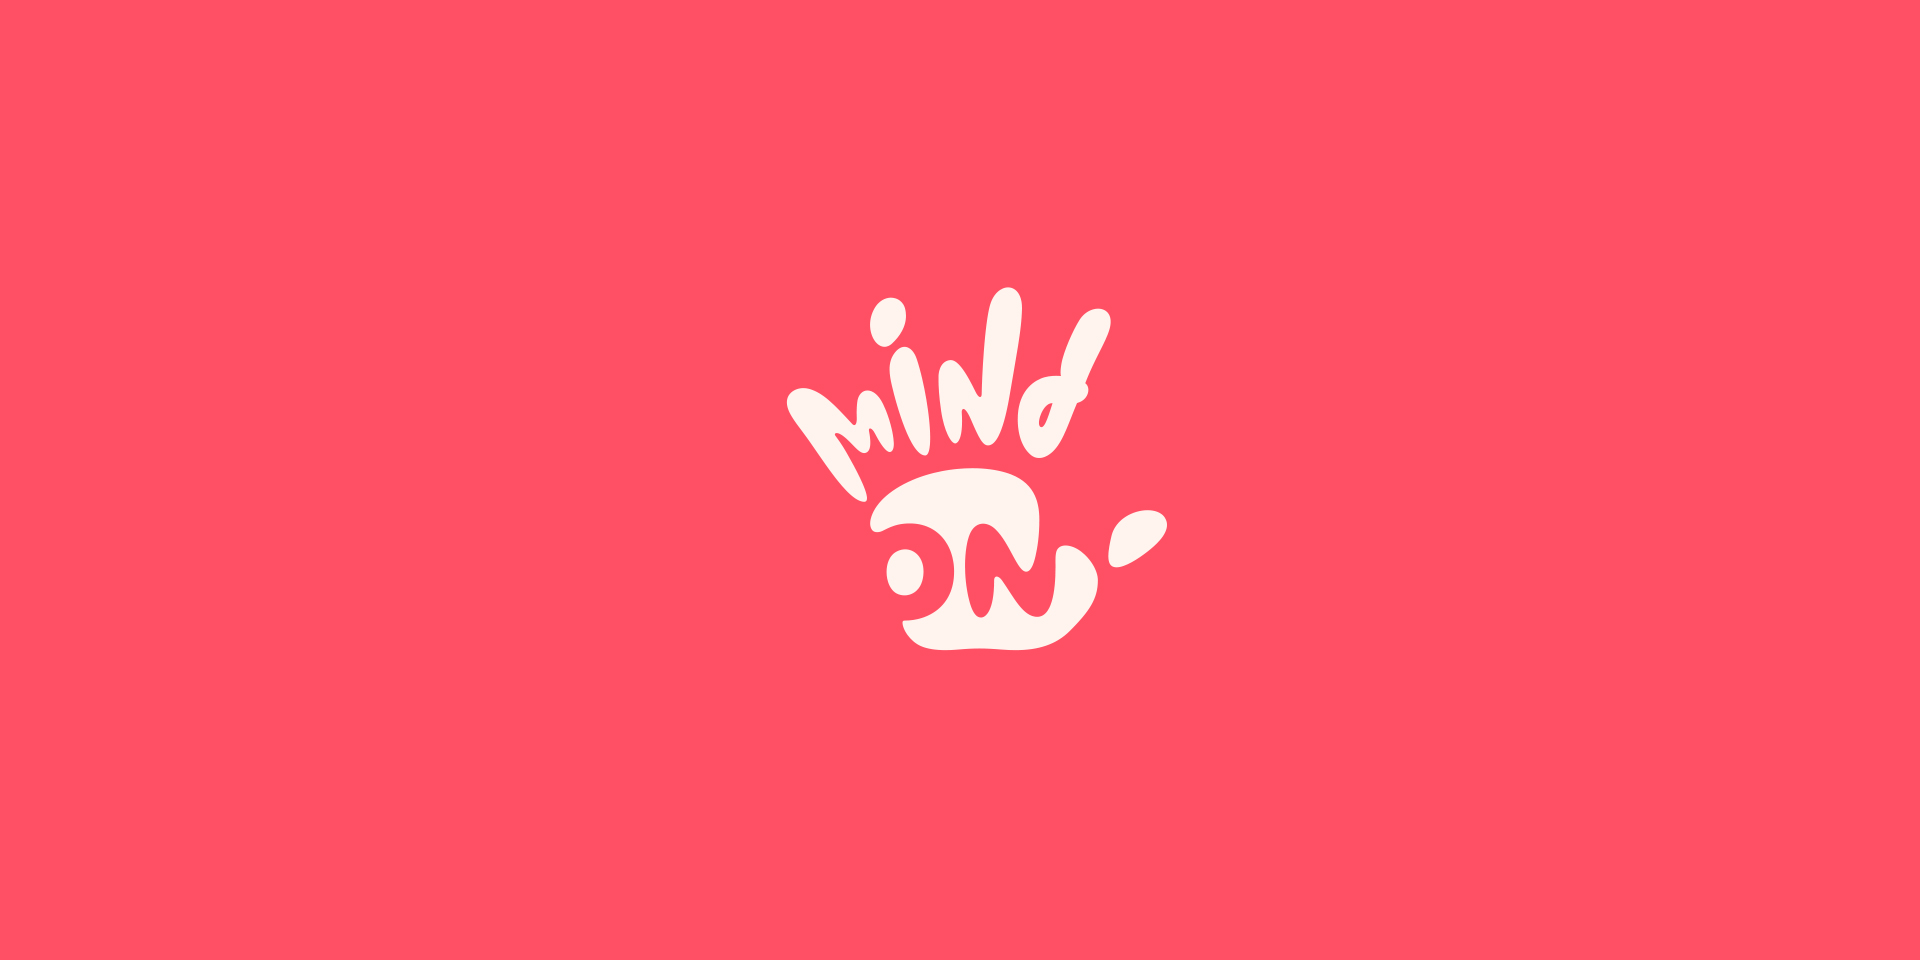 mindon symbol